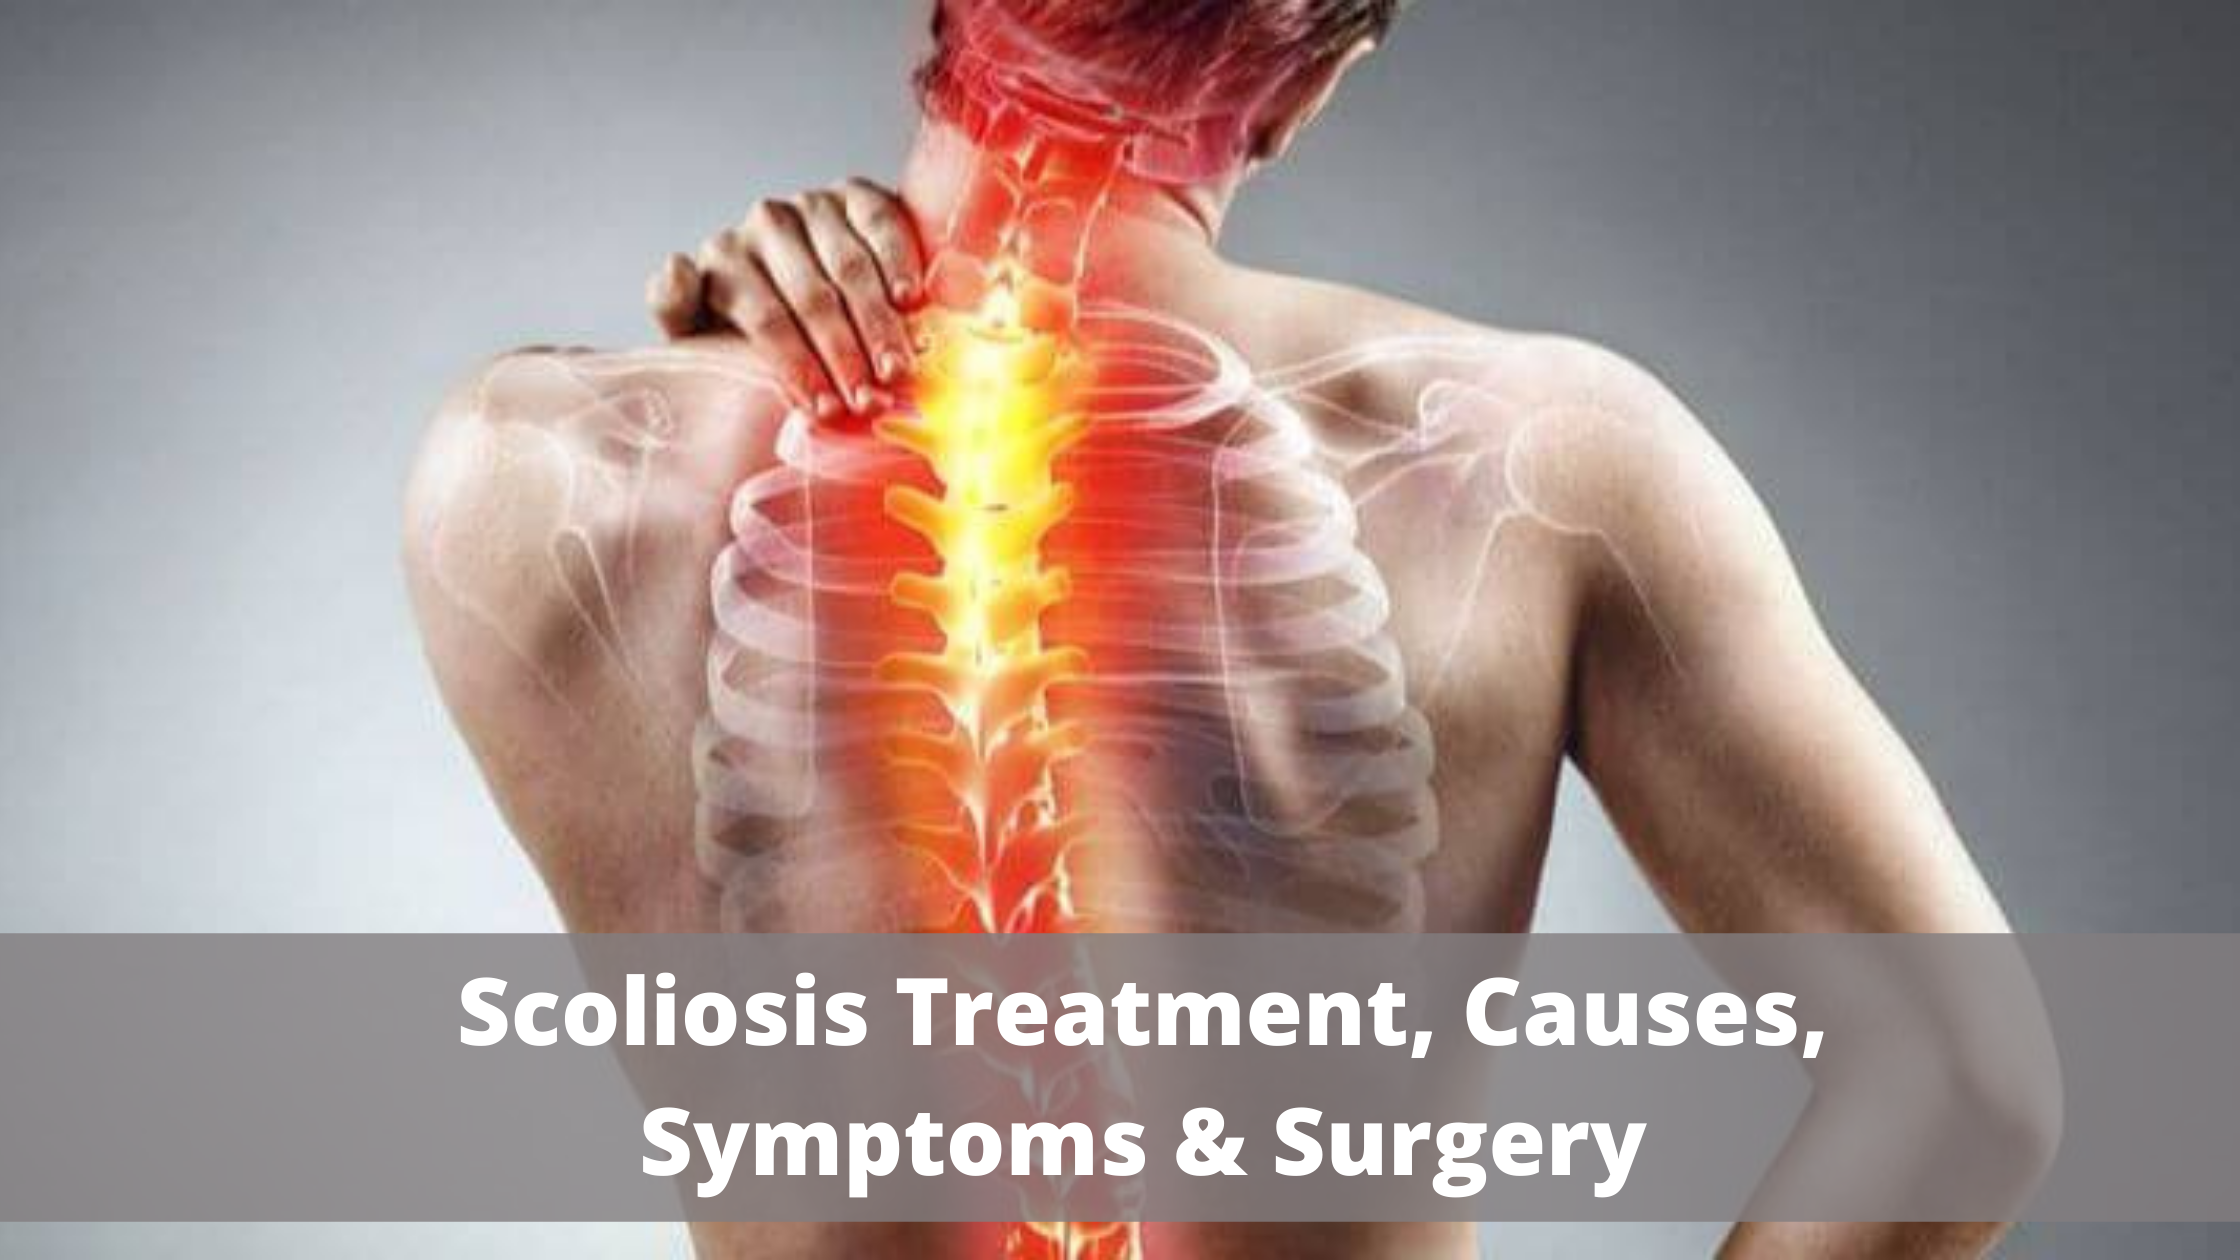 Scoliosis-Types-Causes-Symptoms-Treatment